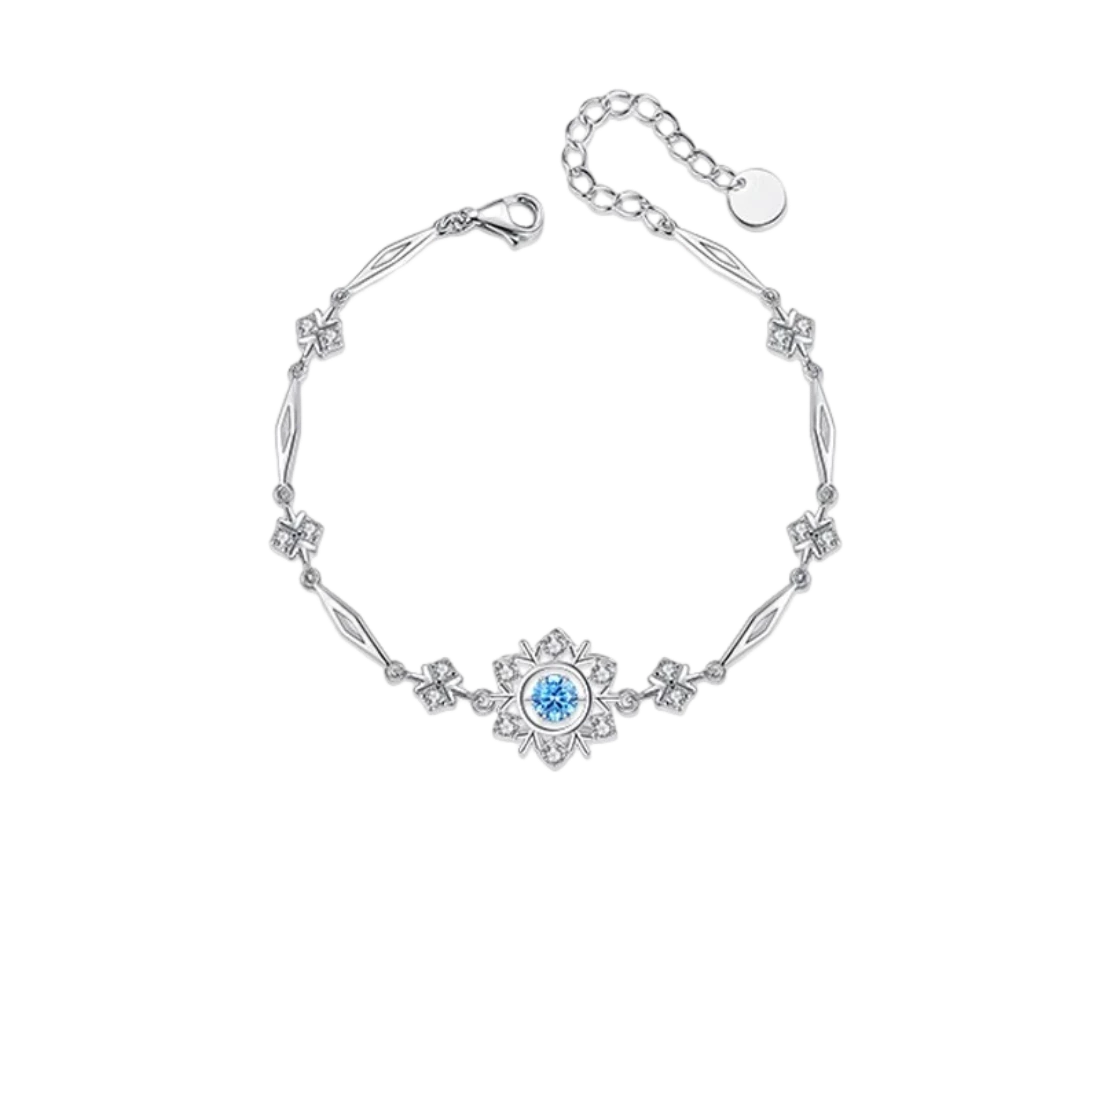 Snowflake Bracelet Floating Diamond Sterling Silver